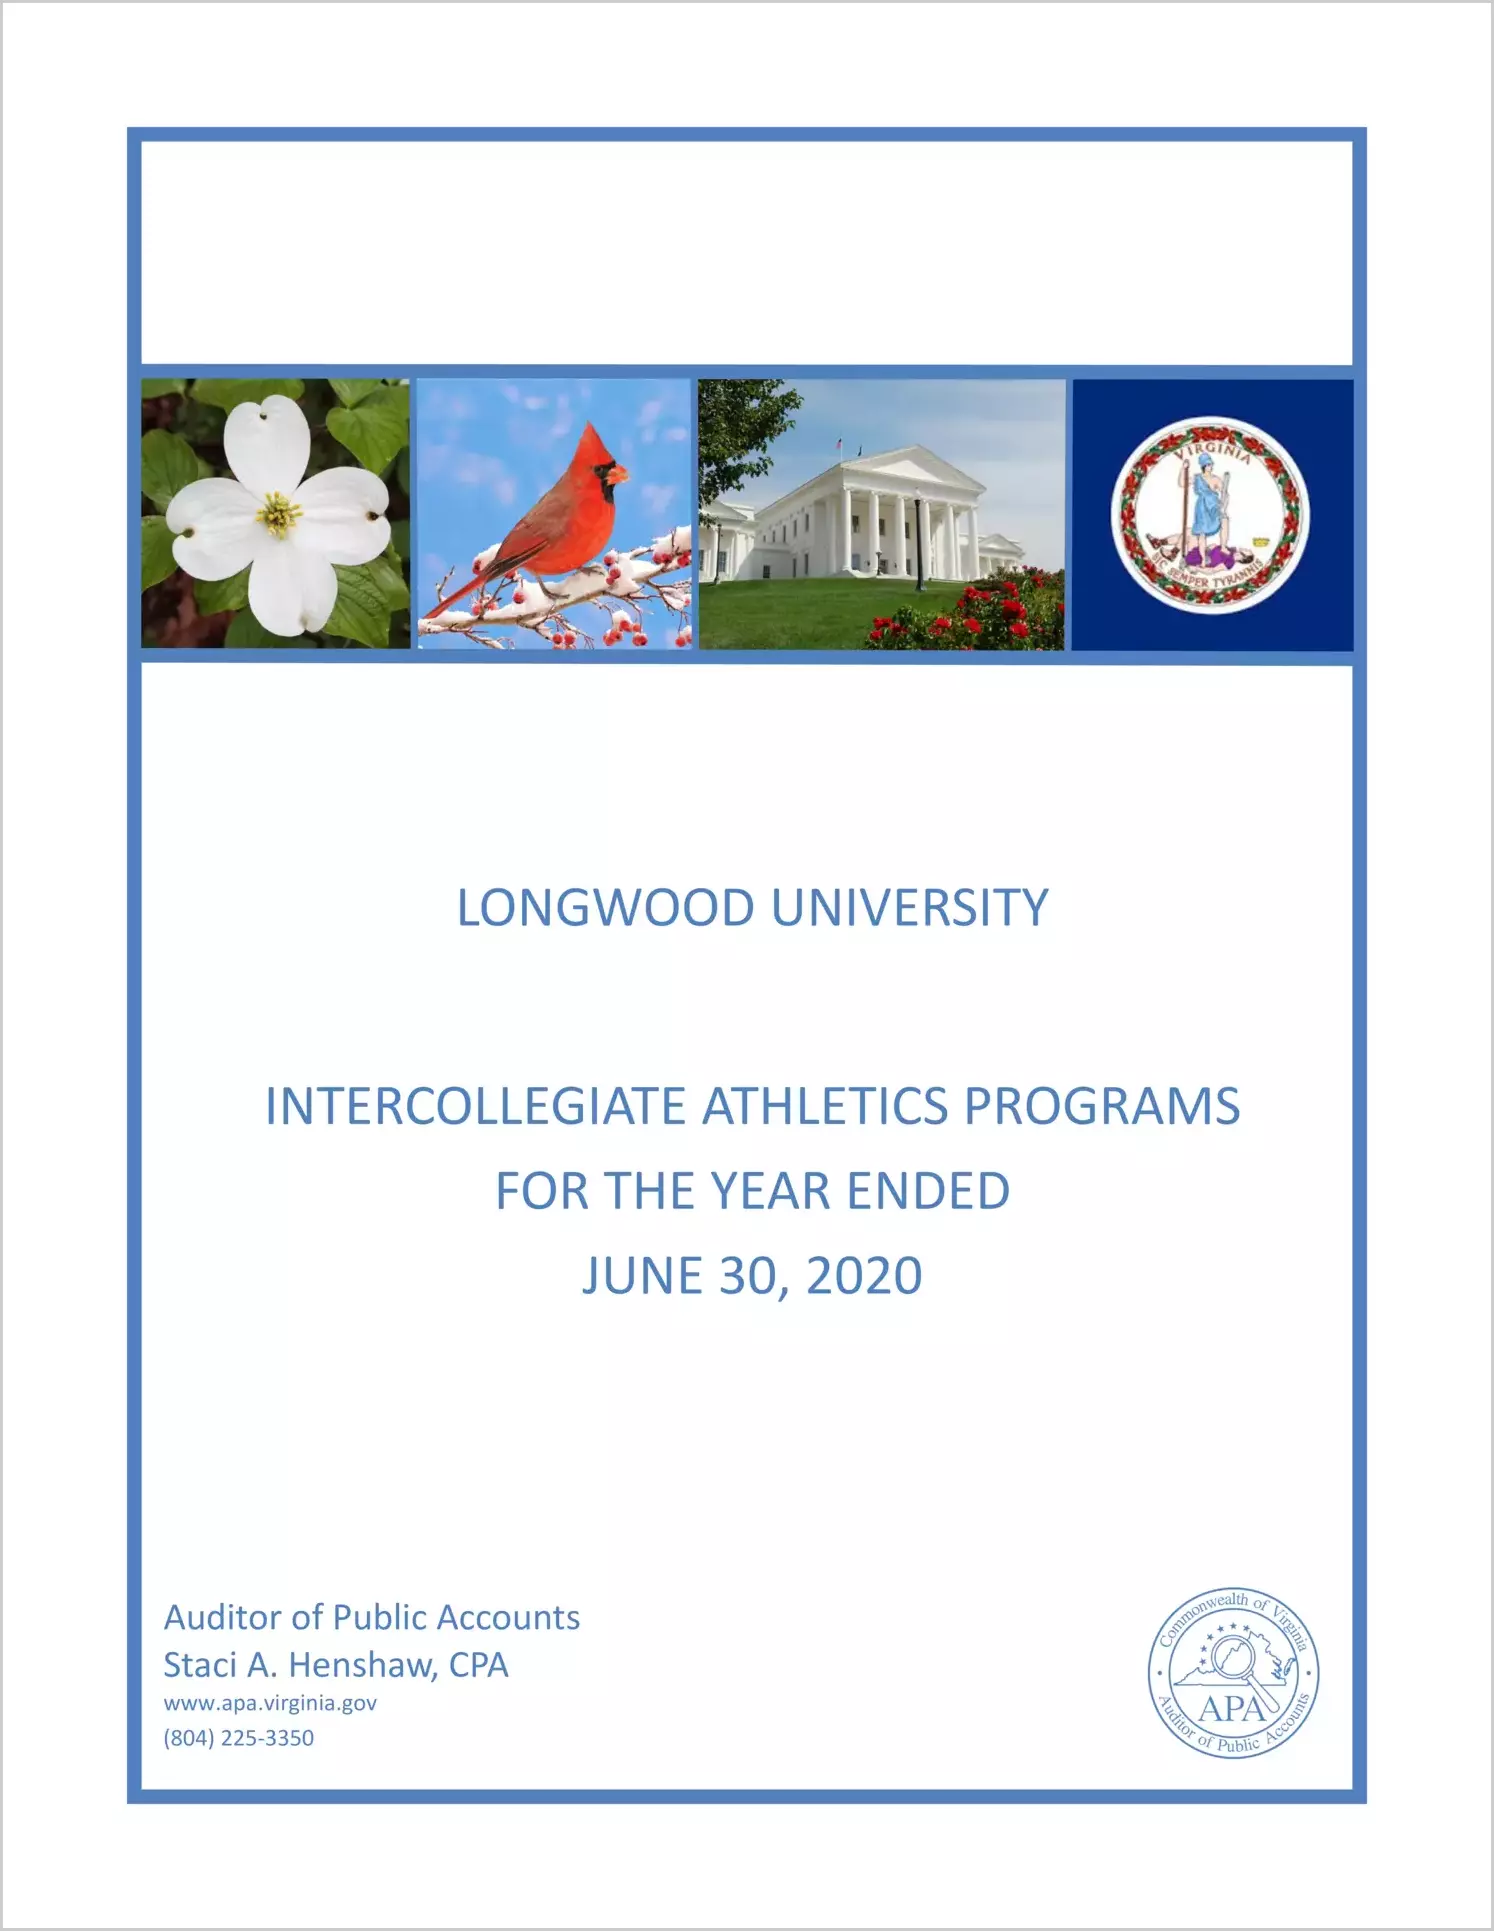 Longwood University Intercollegiate Athletics Programs for the year ended June 30, 2020